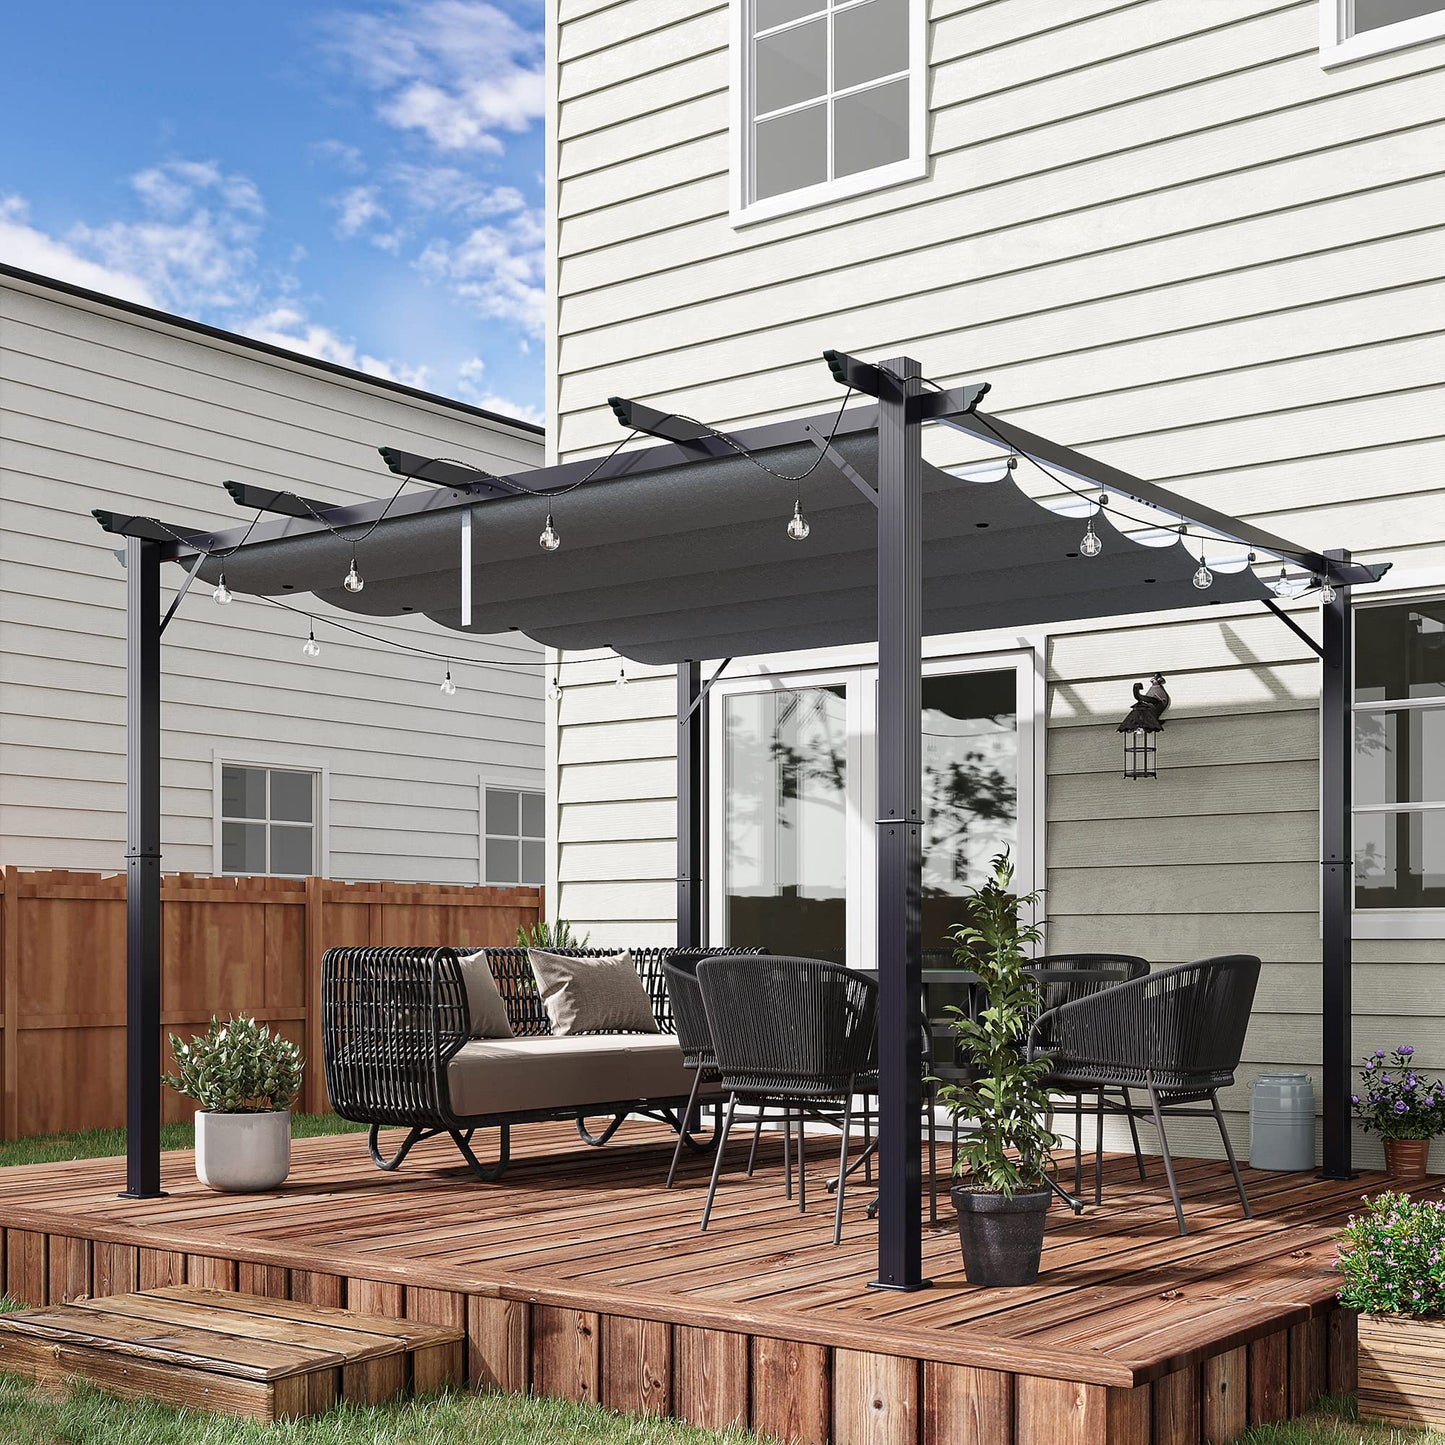 Outsunny 10' x 10' Aluminum Patio Pergola with Retractable Pergola Canopy, Backyard Shade Shelter for Porch, Outdoor Party, Garden, Grill Gazebo, Dark Gray